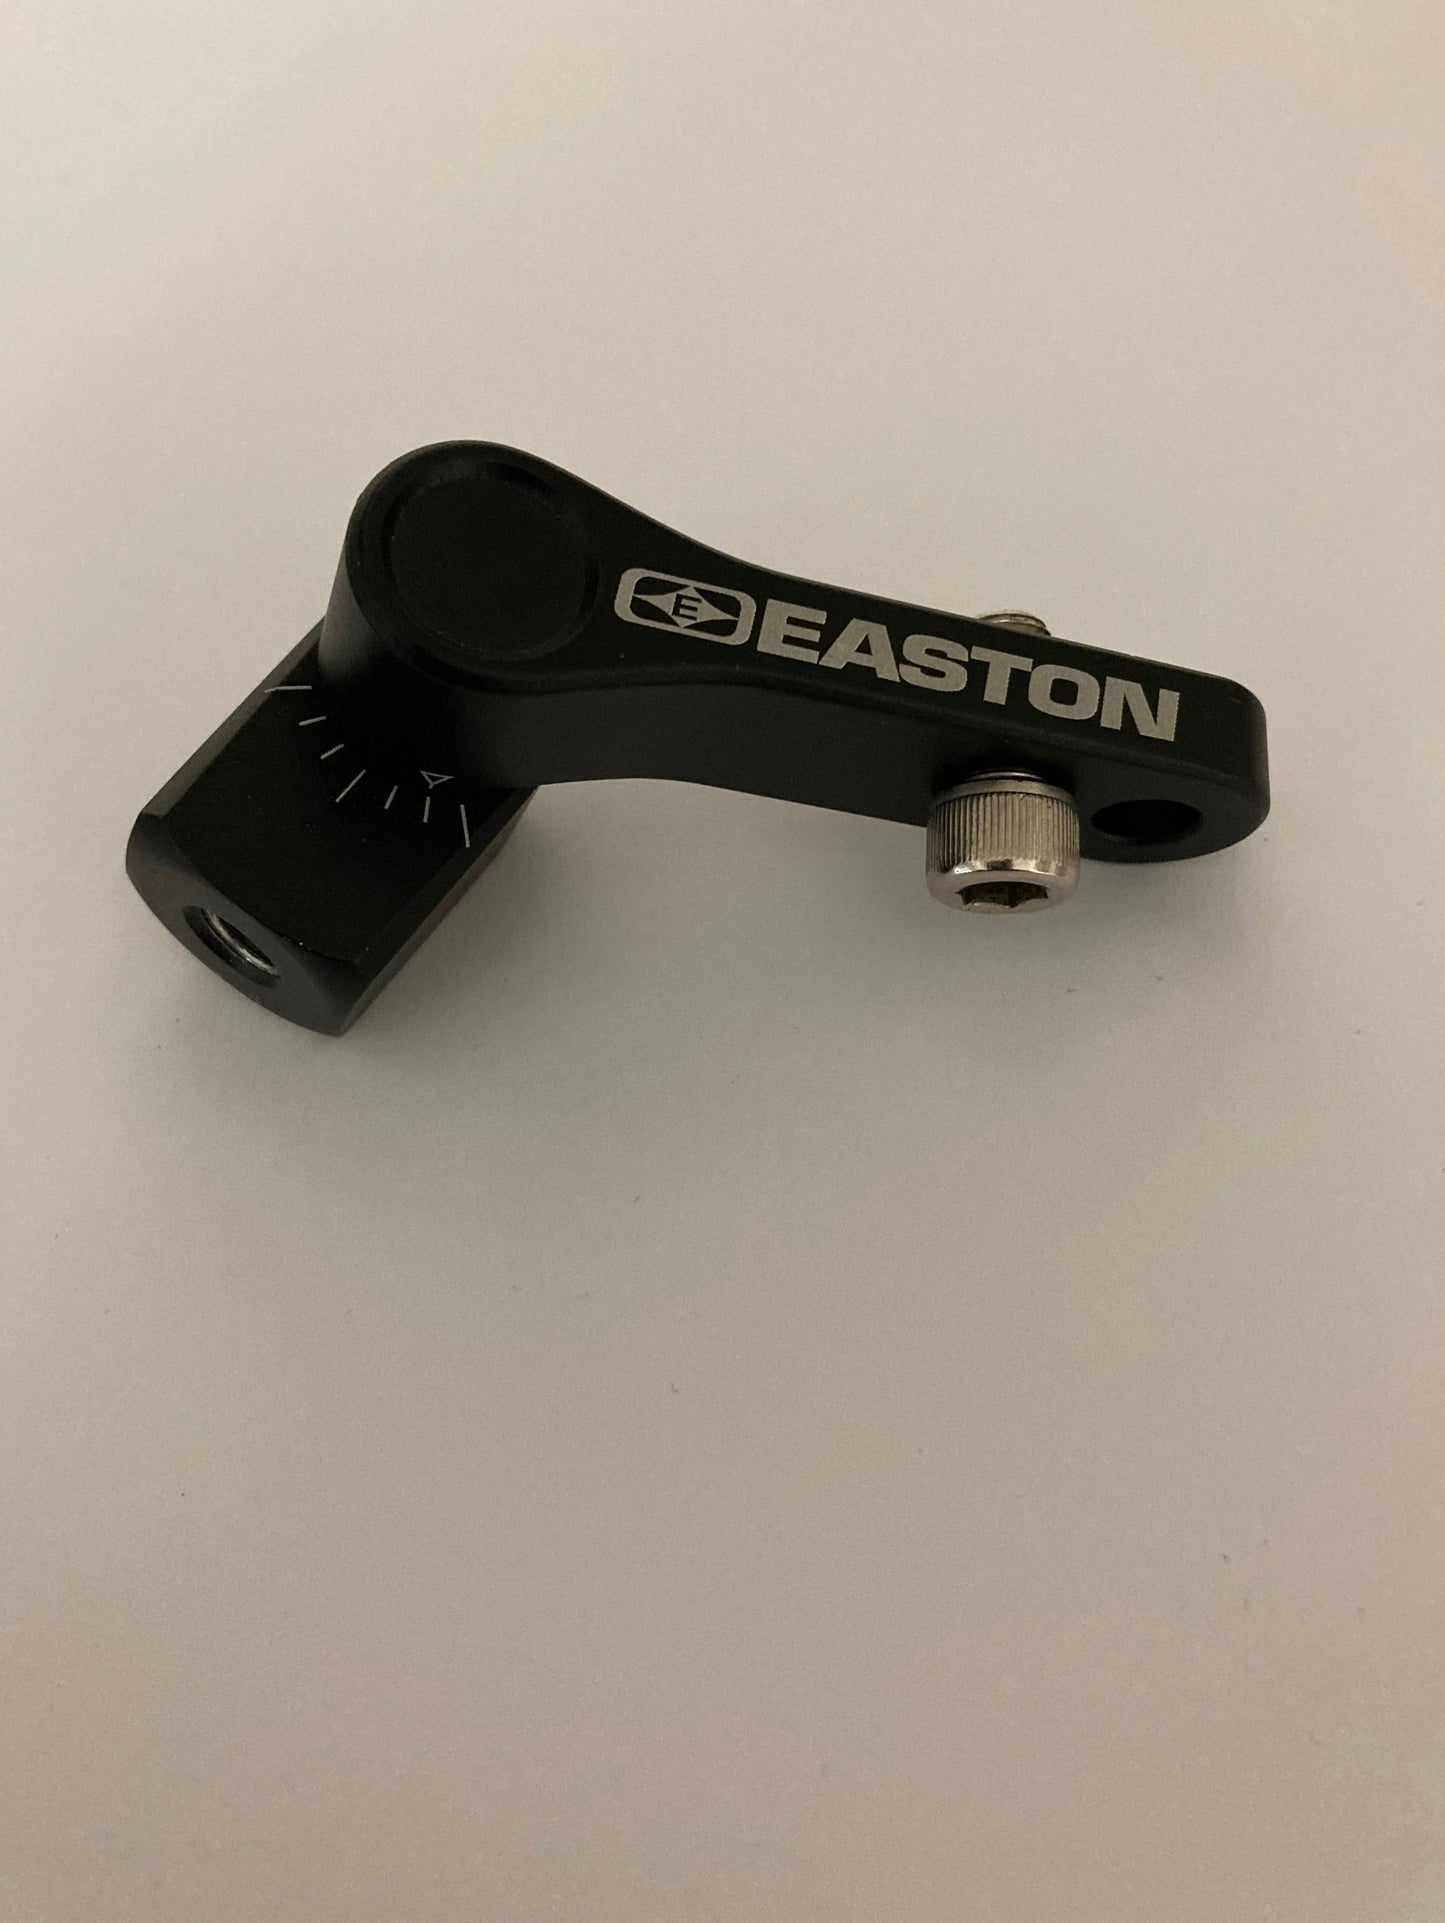 Easton Side Bar Adapter - Used